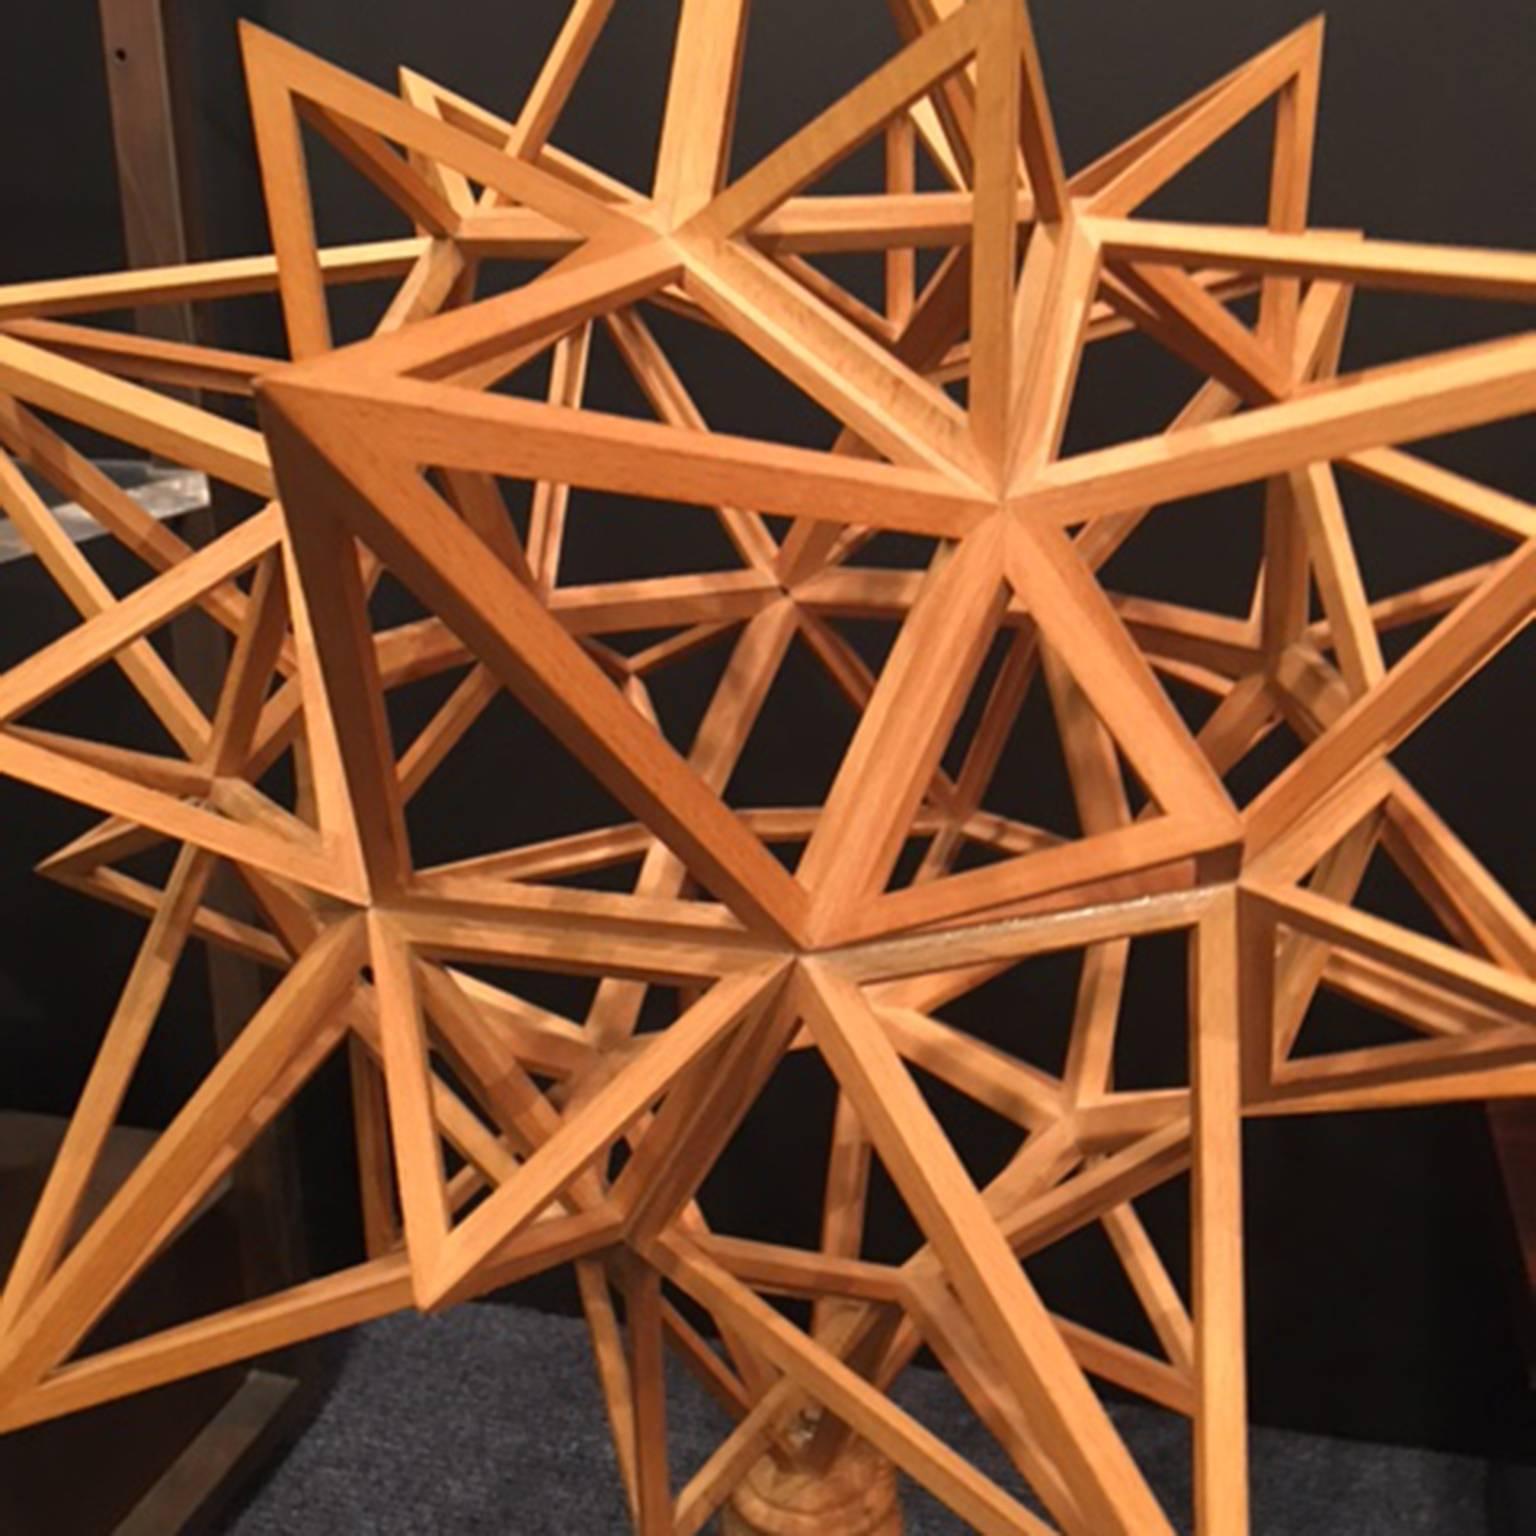 Mounted wood polyhedron.